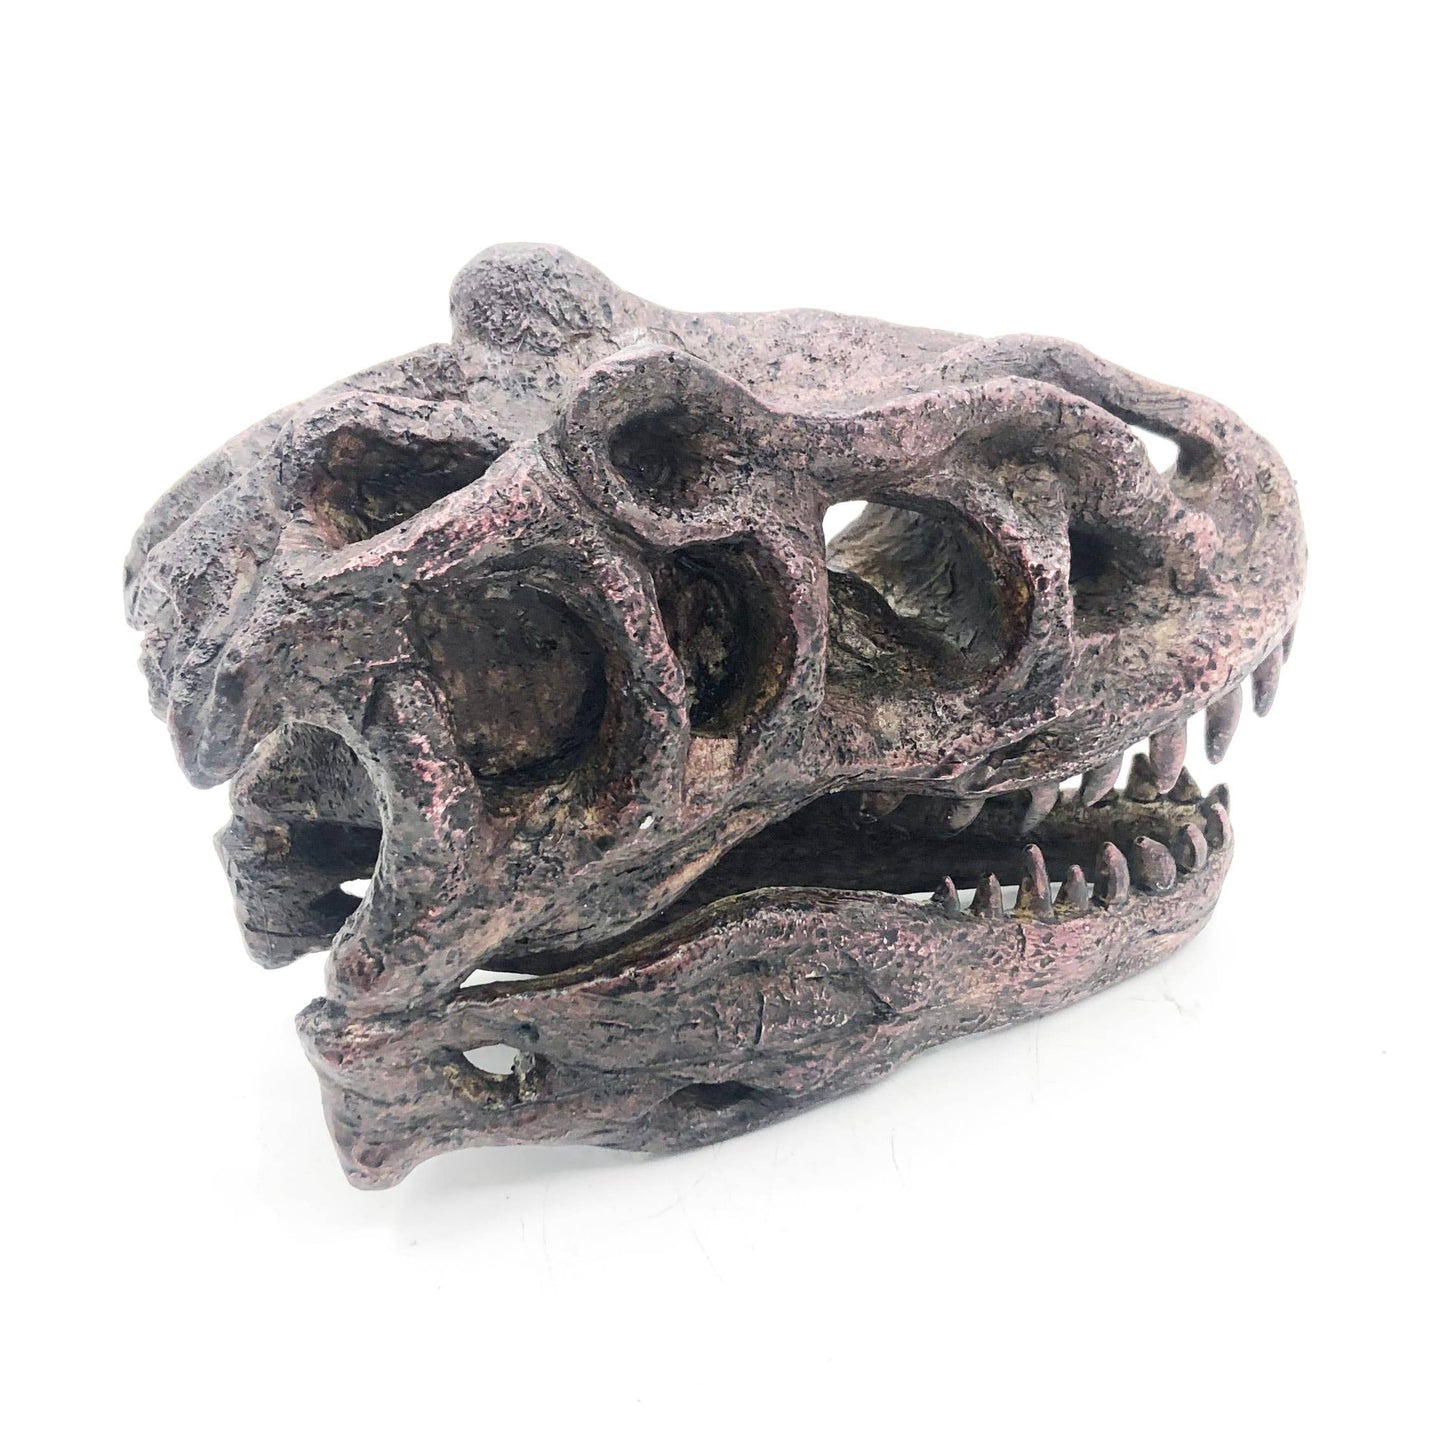 Replica Allosaurus Mini Dinosaur Fossil Skull - Stemcell Science Shop